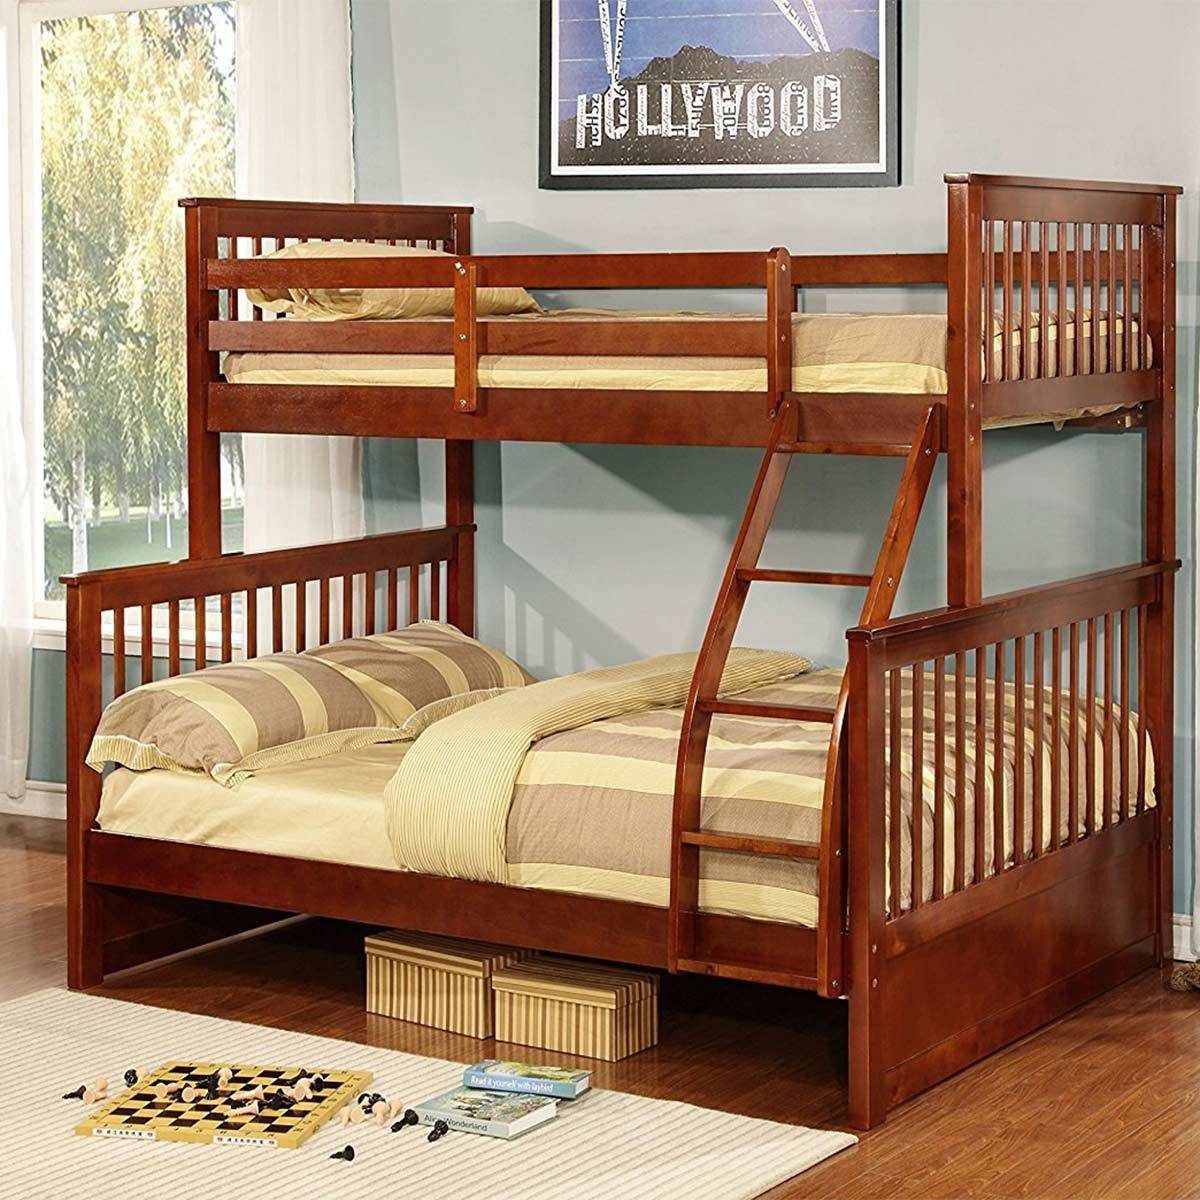 fun bunk beds for kids